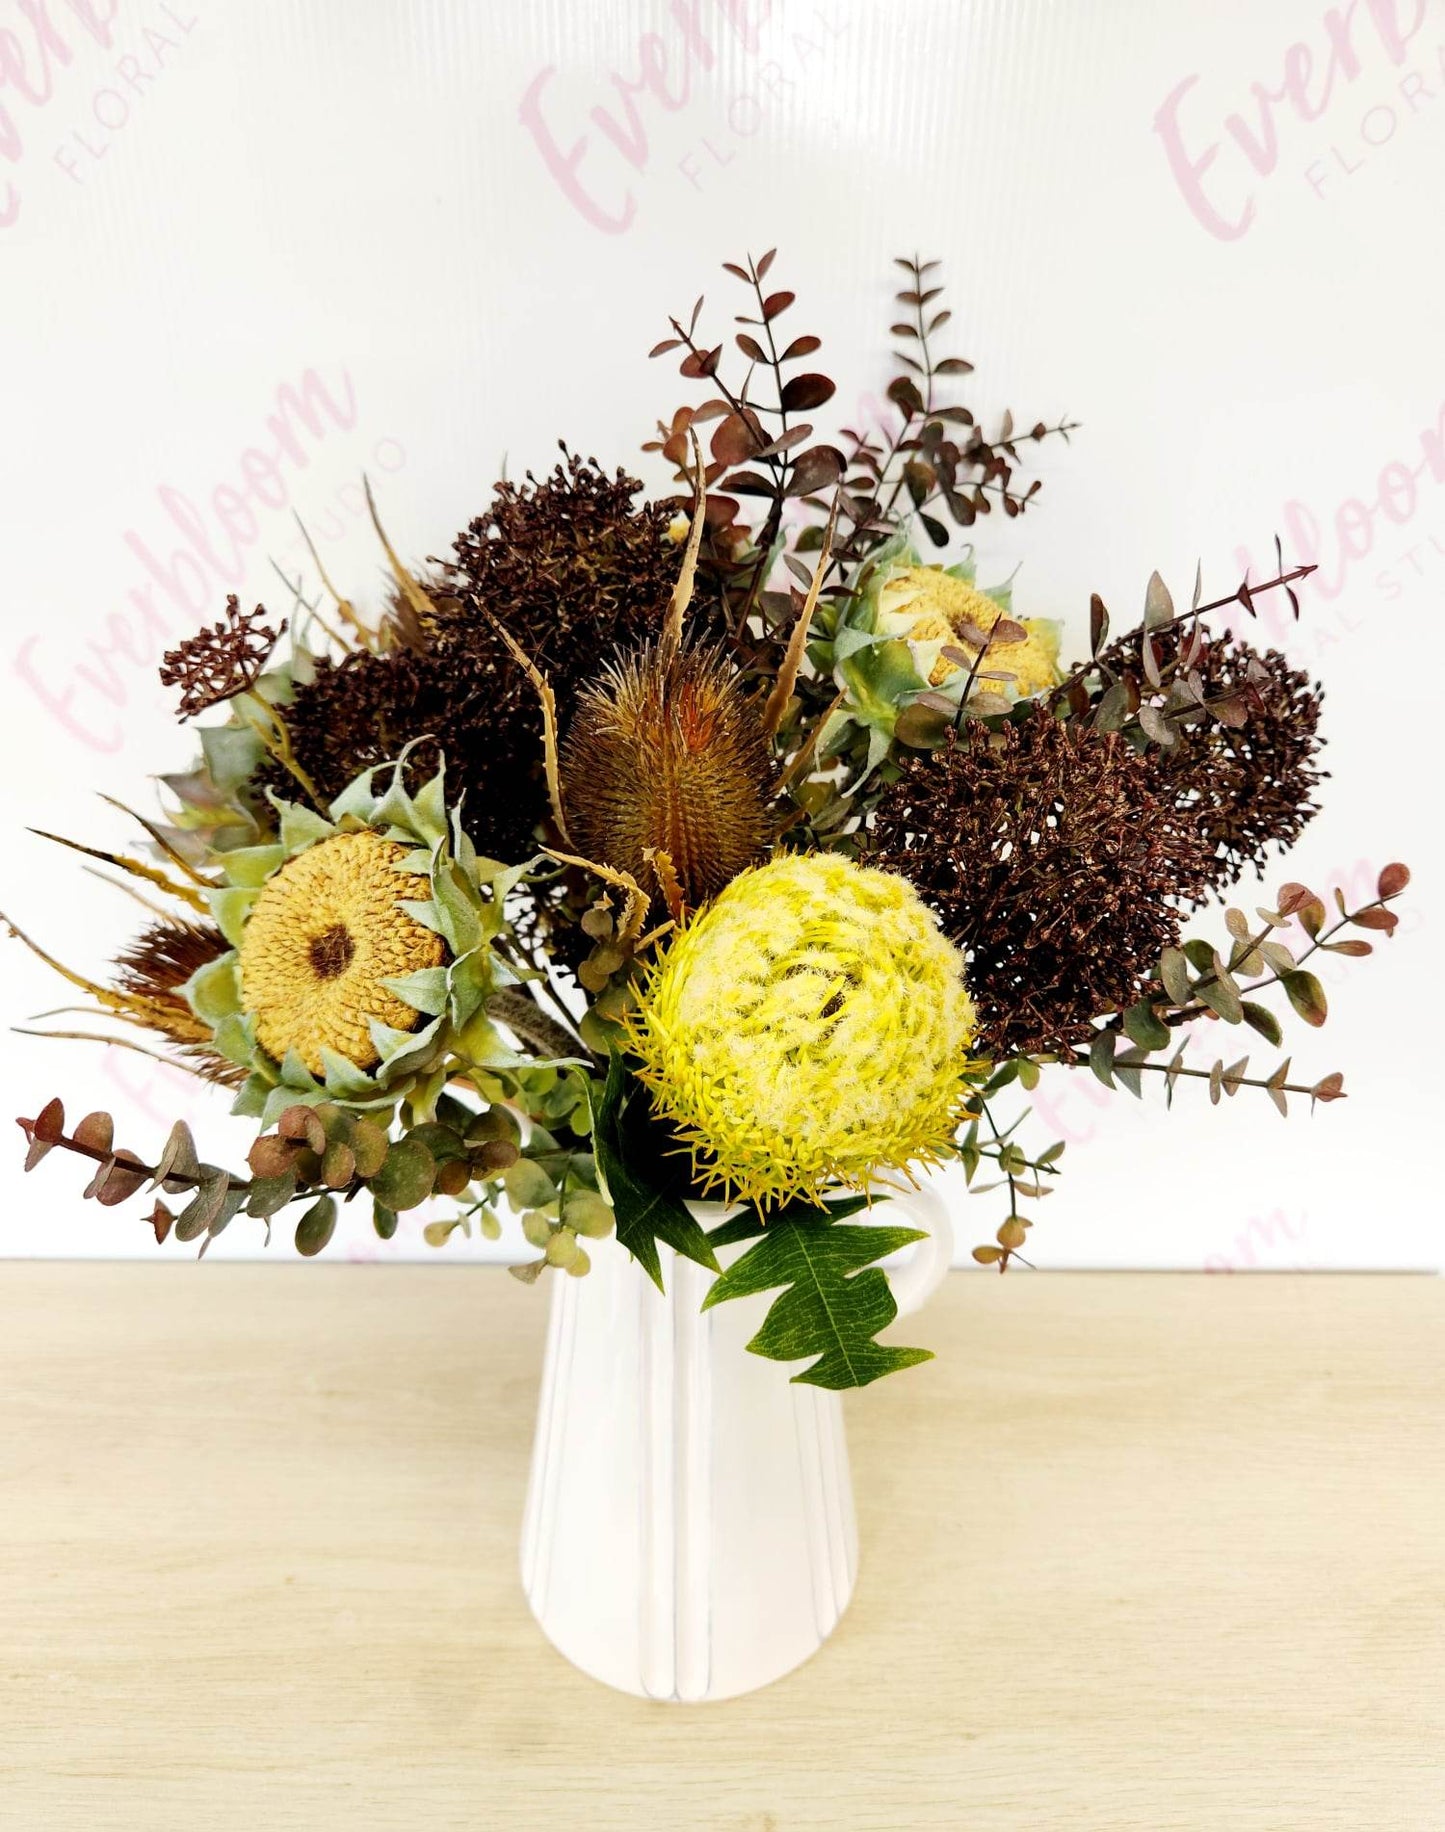 Mount Maungaui and Papamoa Florist - Everbloom Floral Studio. Faux Flowers